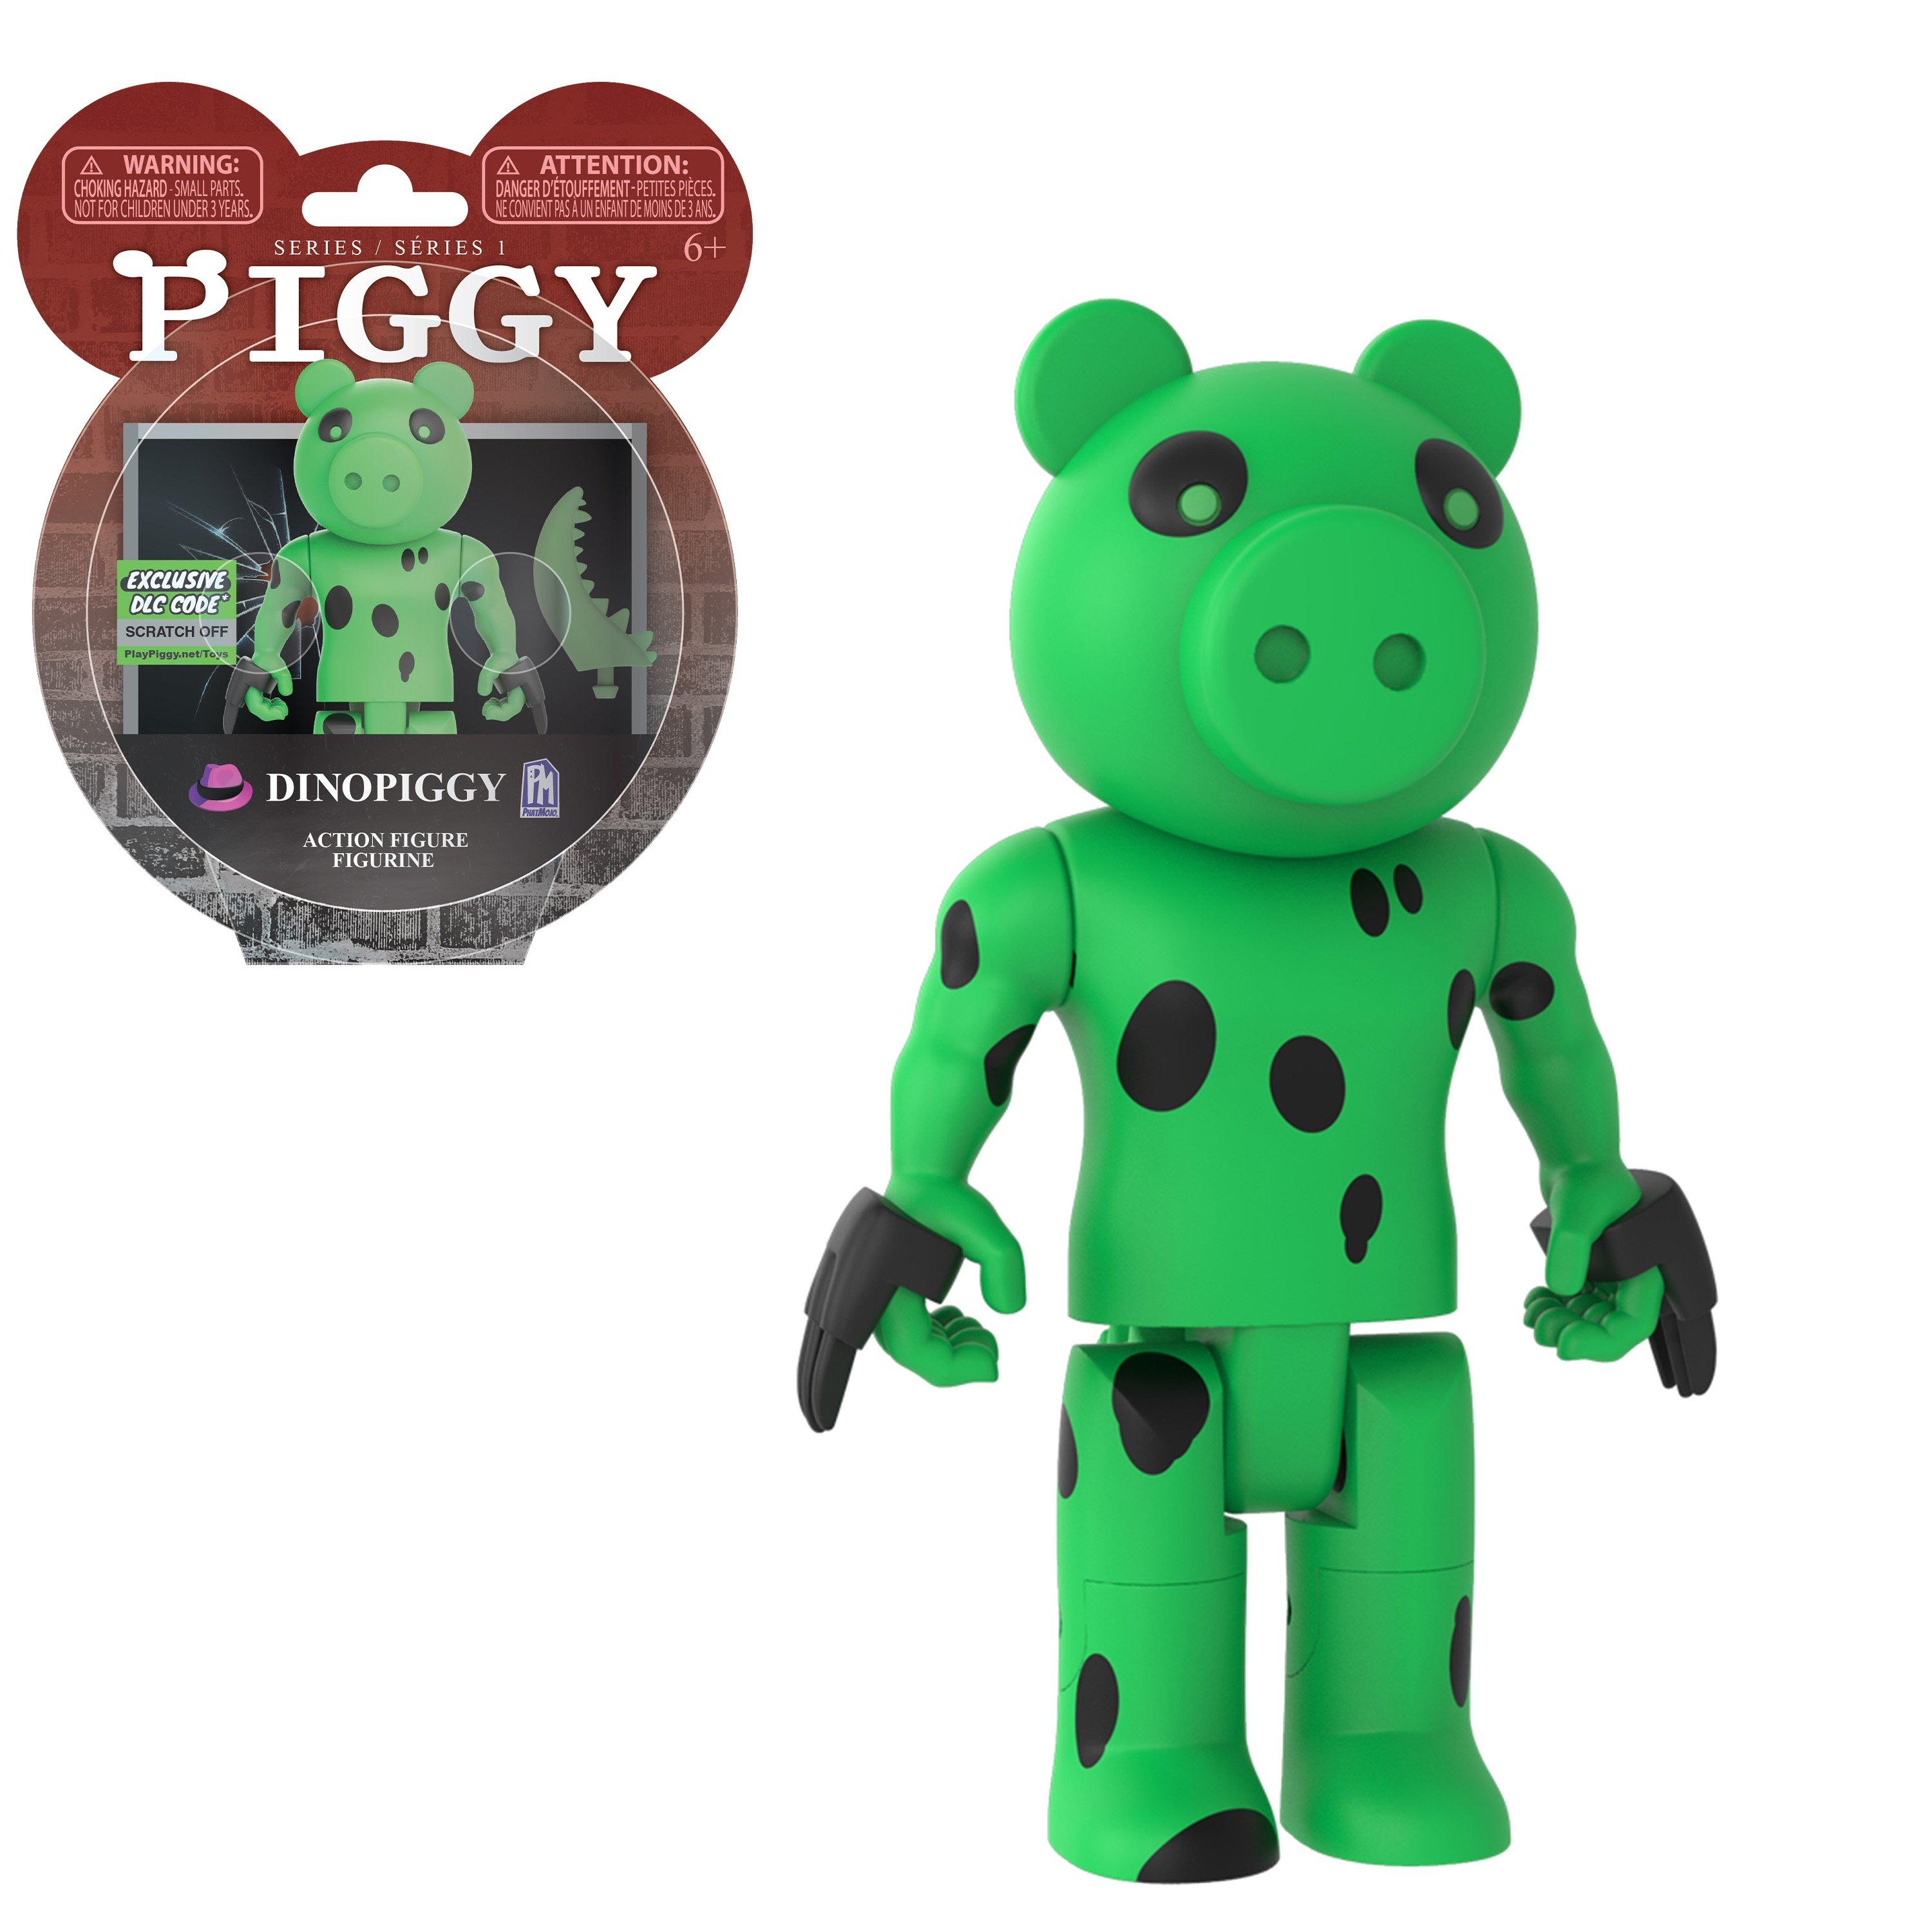 Piggy Dinopiggy Series 1 Action Figure Gamestop - make your own roblox figure